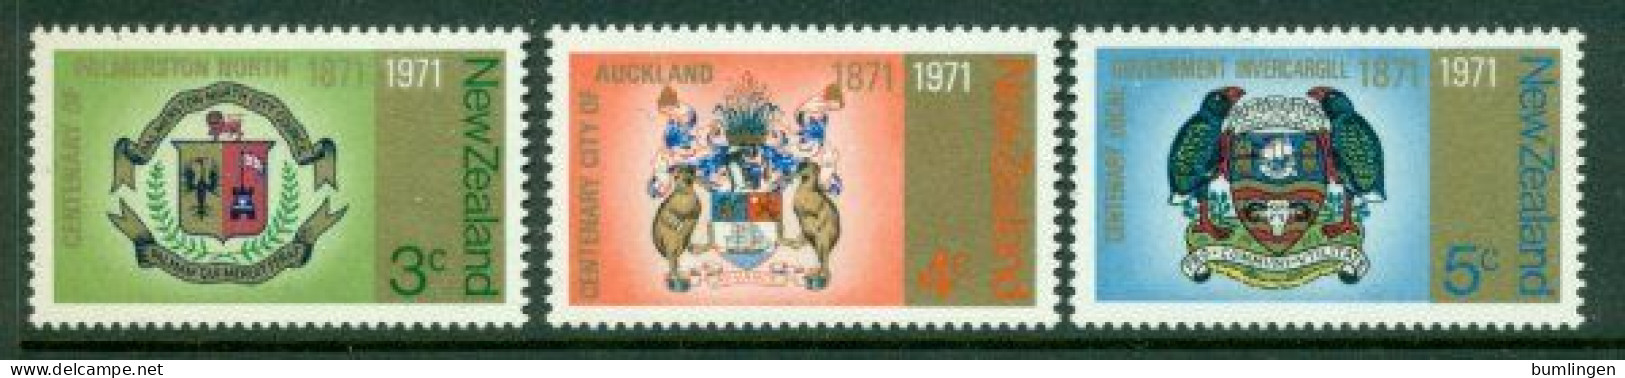 NEW ZEALAND 1971 Mi 554-56** City Coat Of Arms [B874] - Timbres